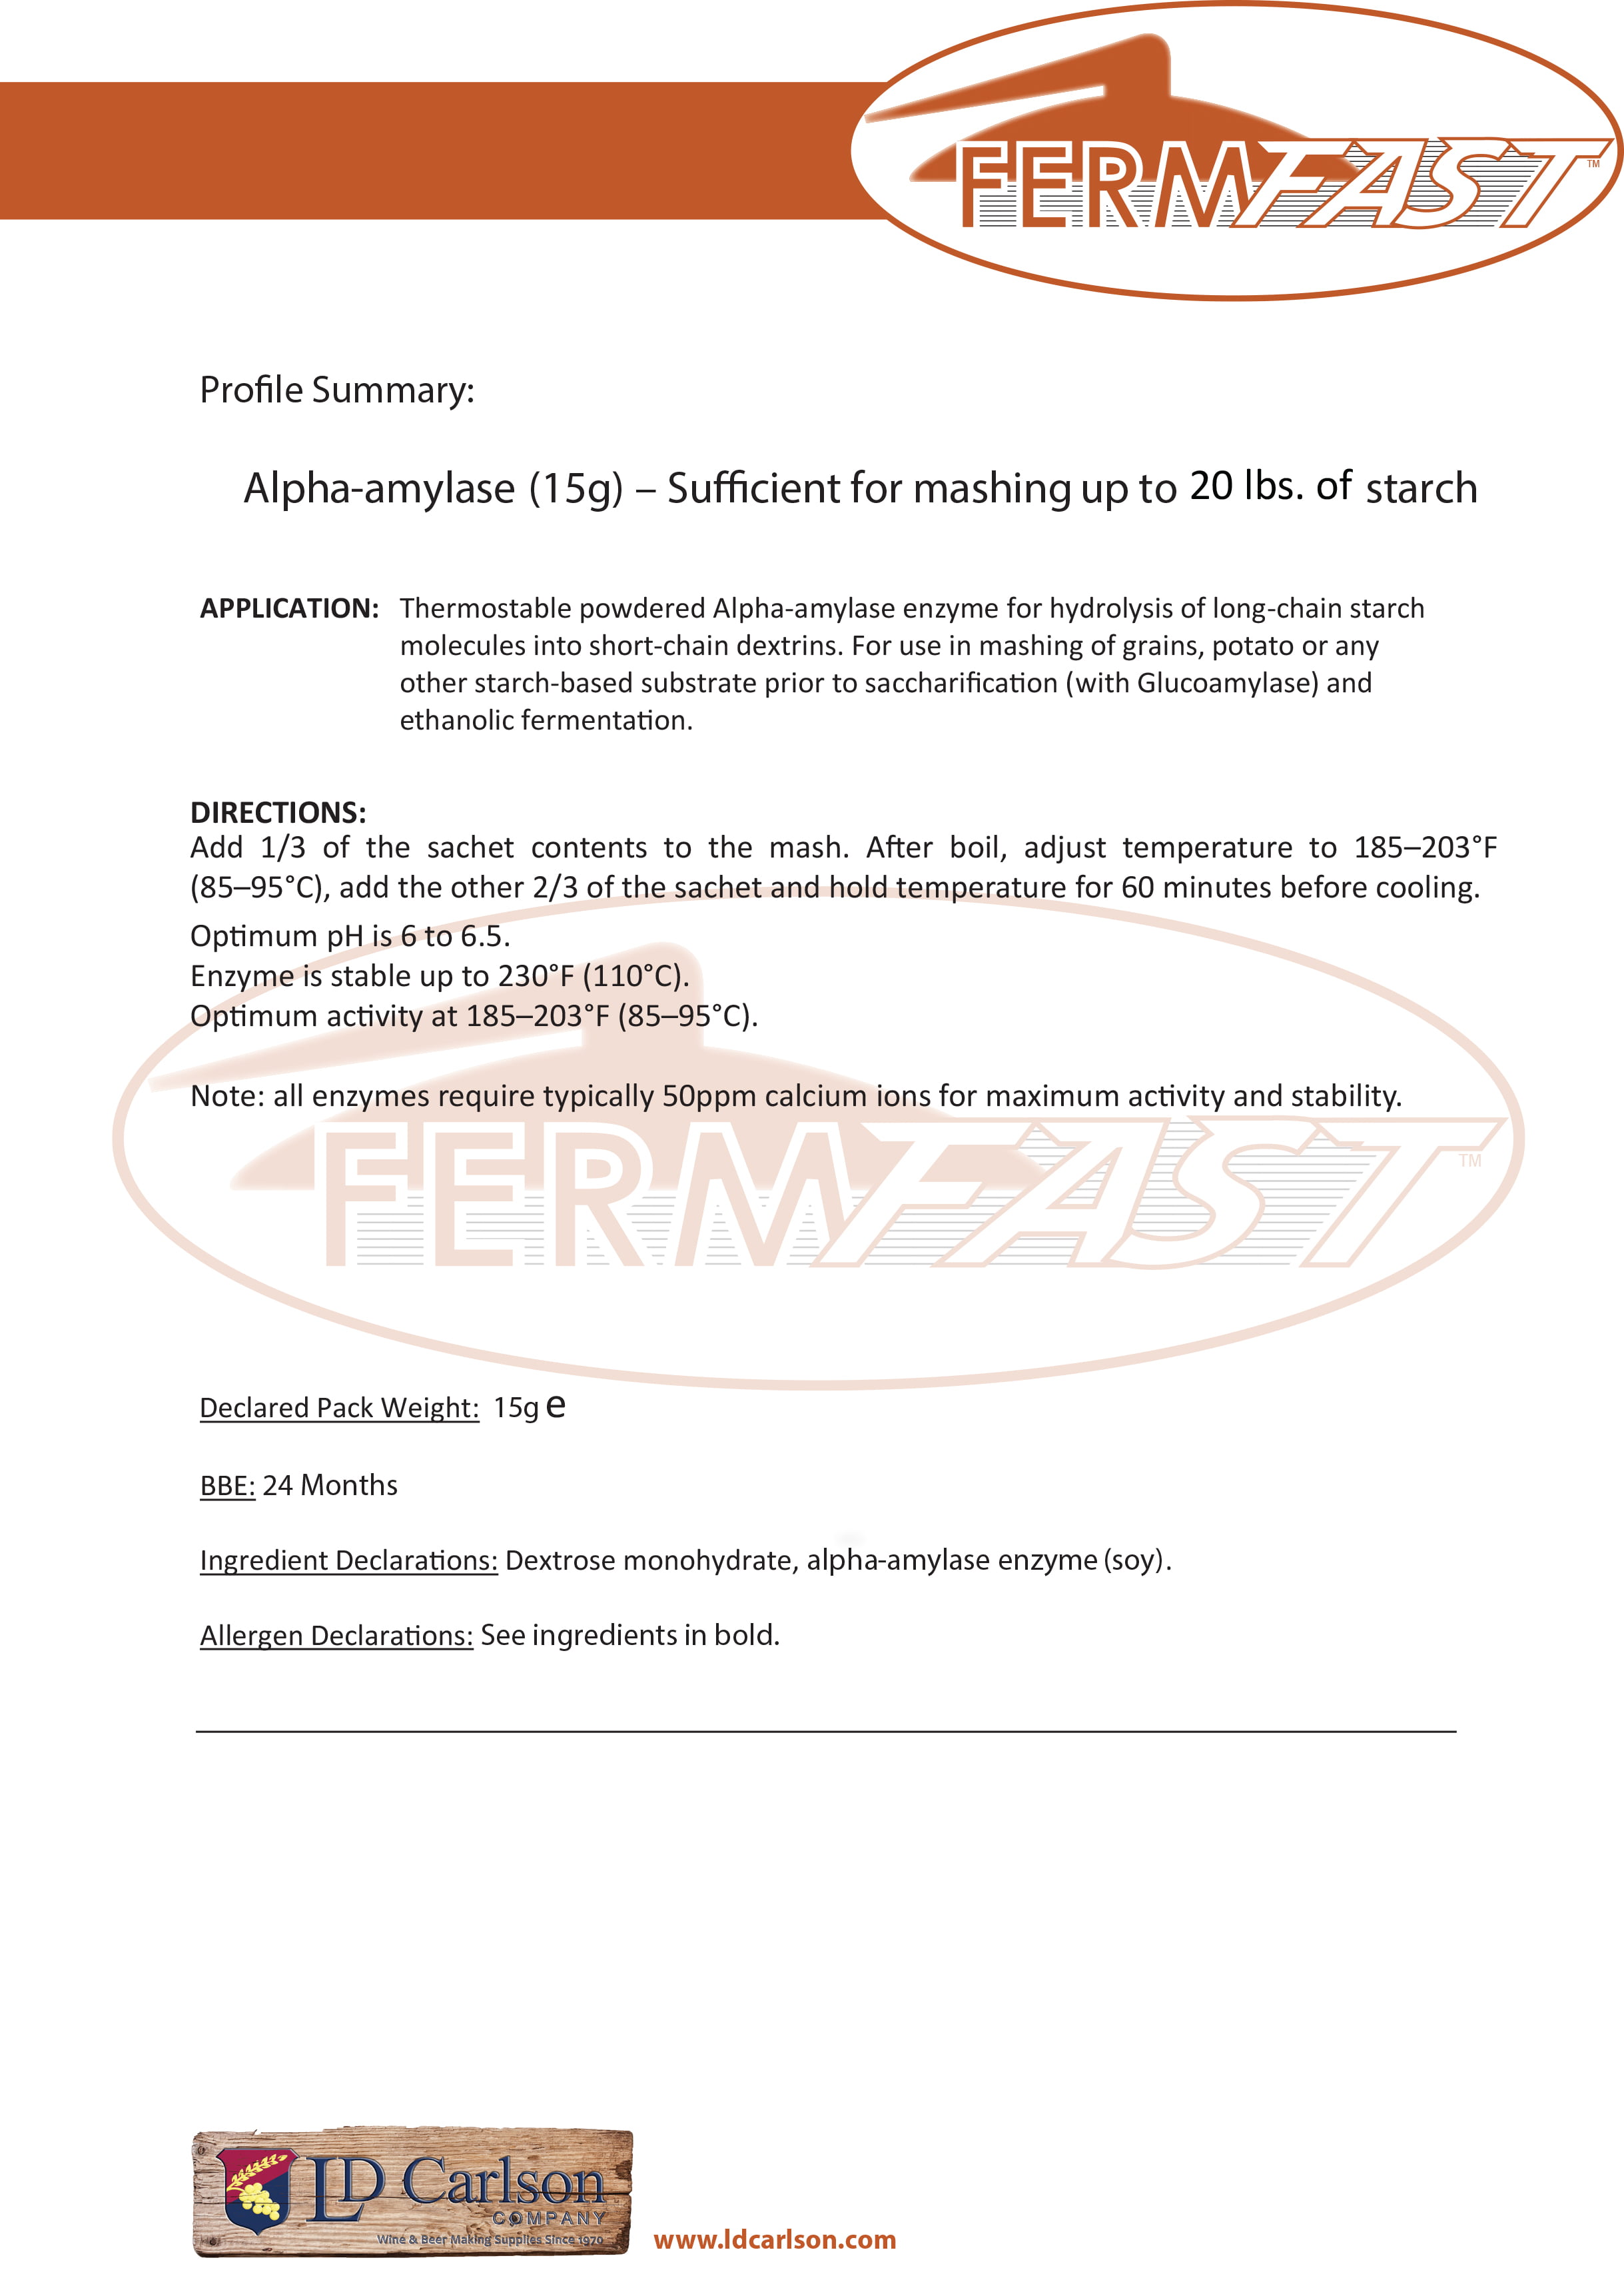 FERMFAST HOZQ8-053 Glucoamylase Enzyme Single Dose Pack 10G Packet Dry Beta A... 